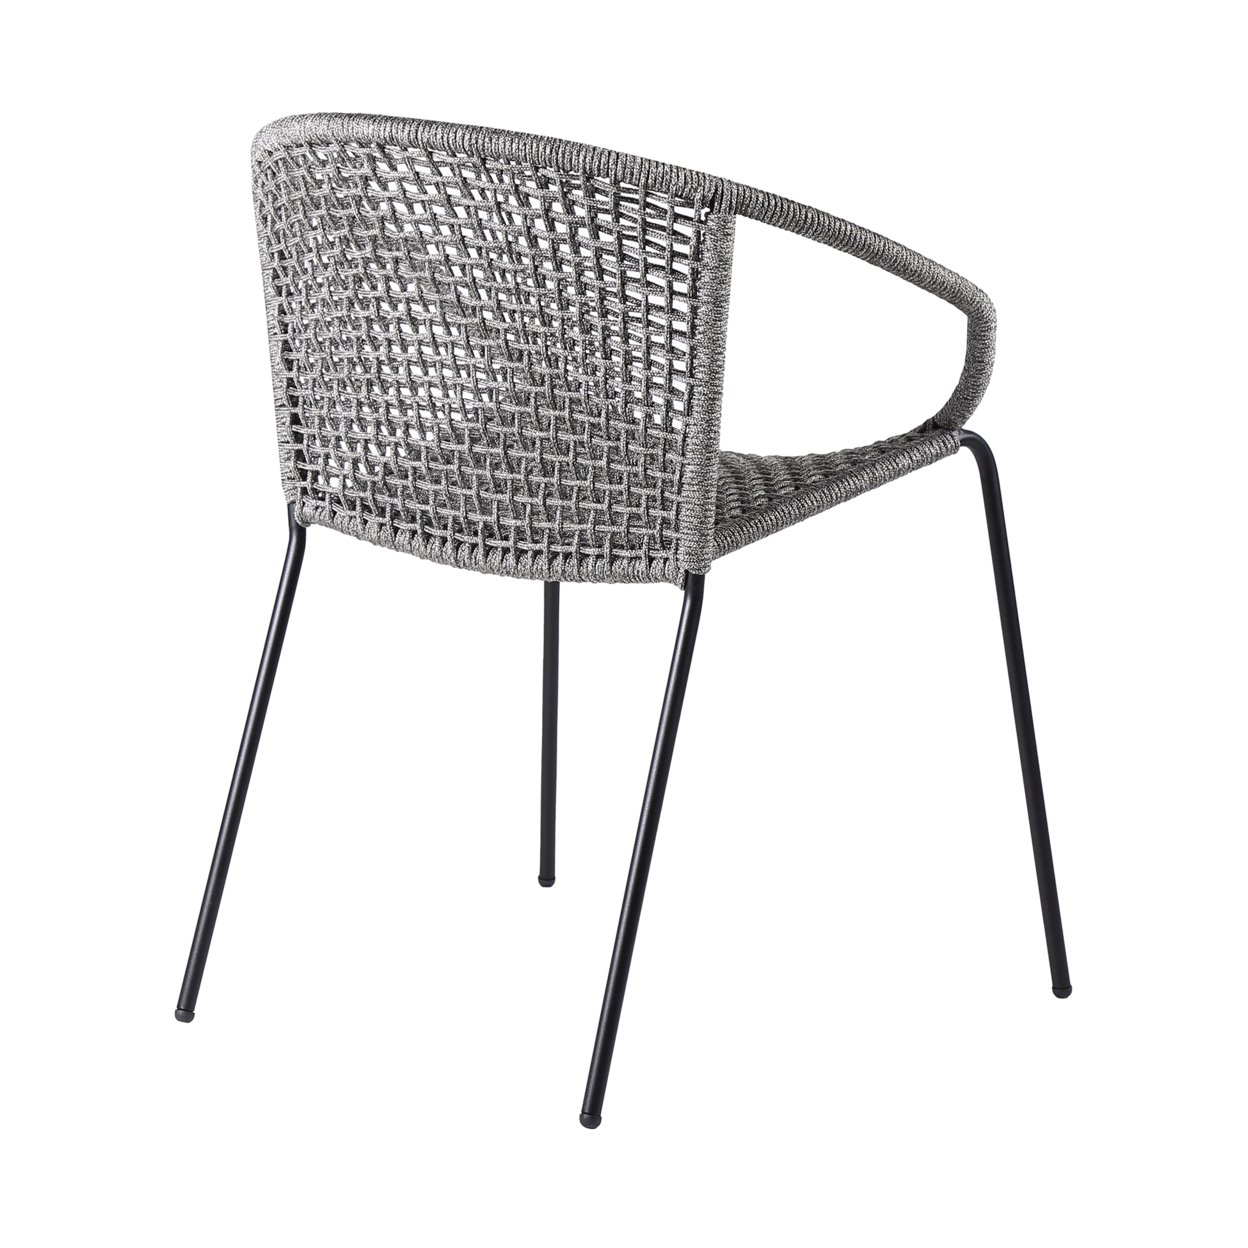 Dining Chair With Interwoven Geometric Seat And Back, Set Of 2, Light Gray- Saltoro Sherpi